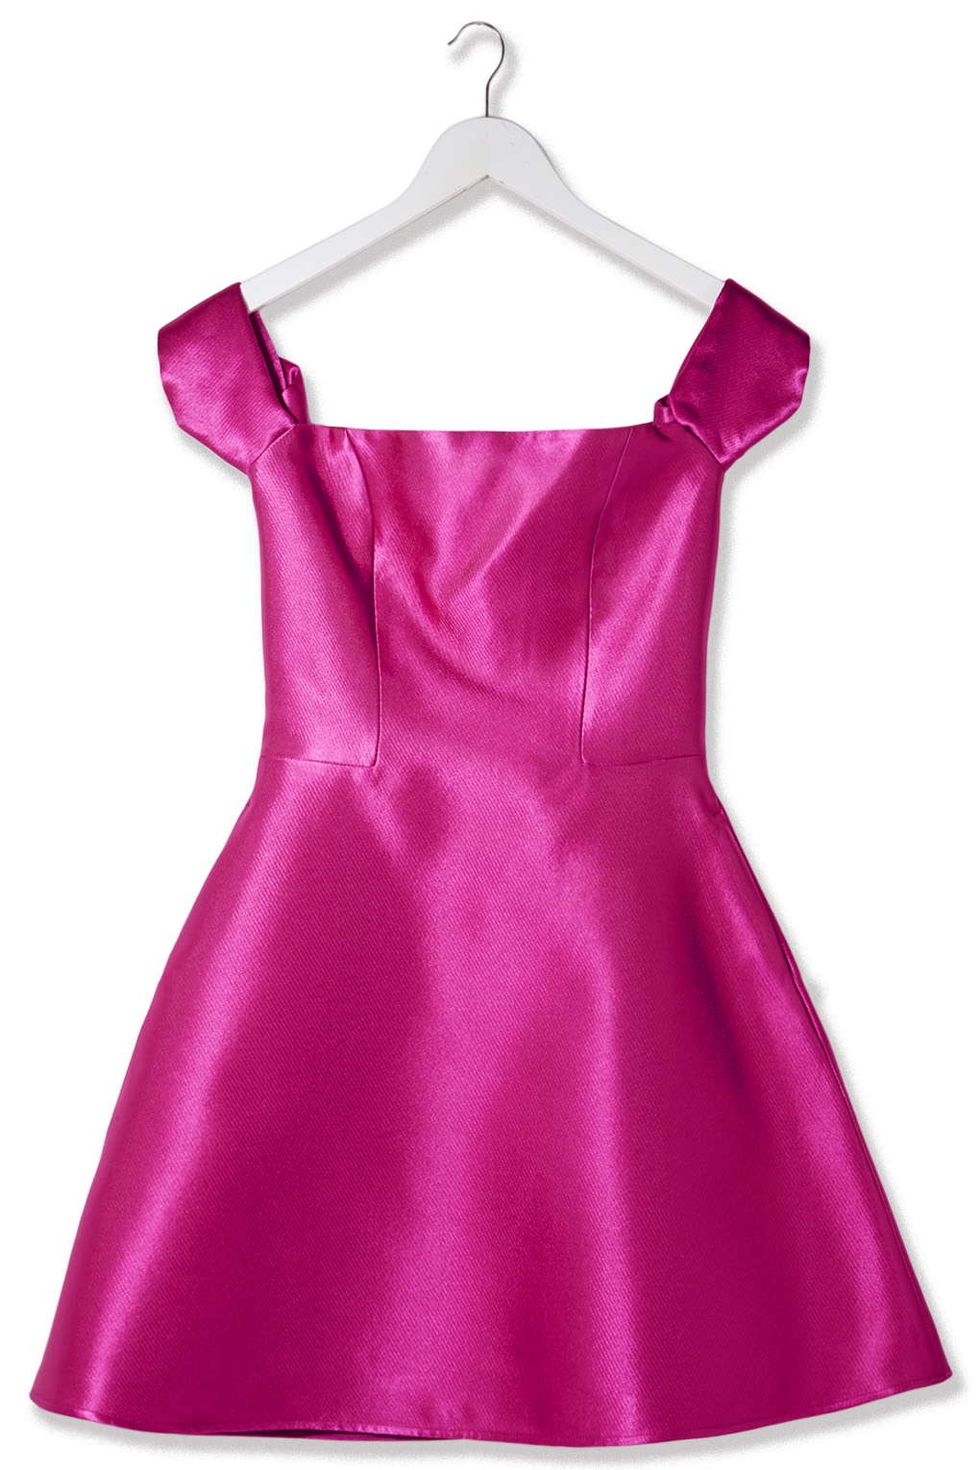 Dress, Purple, Textile, Magenta, White, Pink, Pattern, Lavender, One-piece garment, Clothes hanger, 